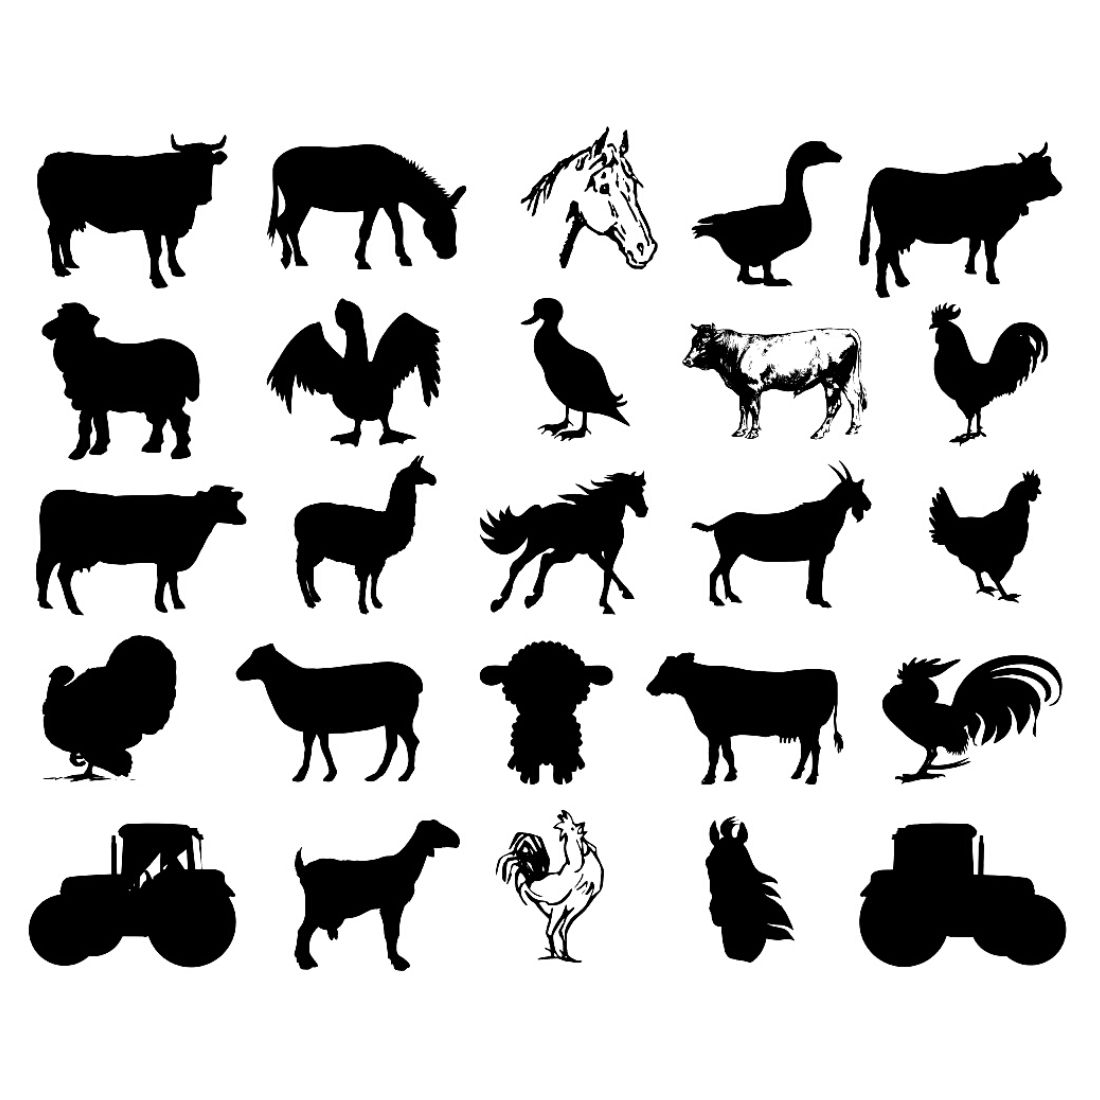 Farm Animals Silhouette Bundles cover image.